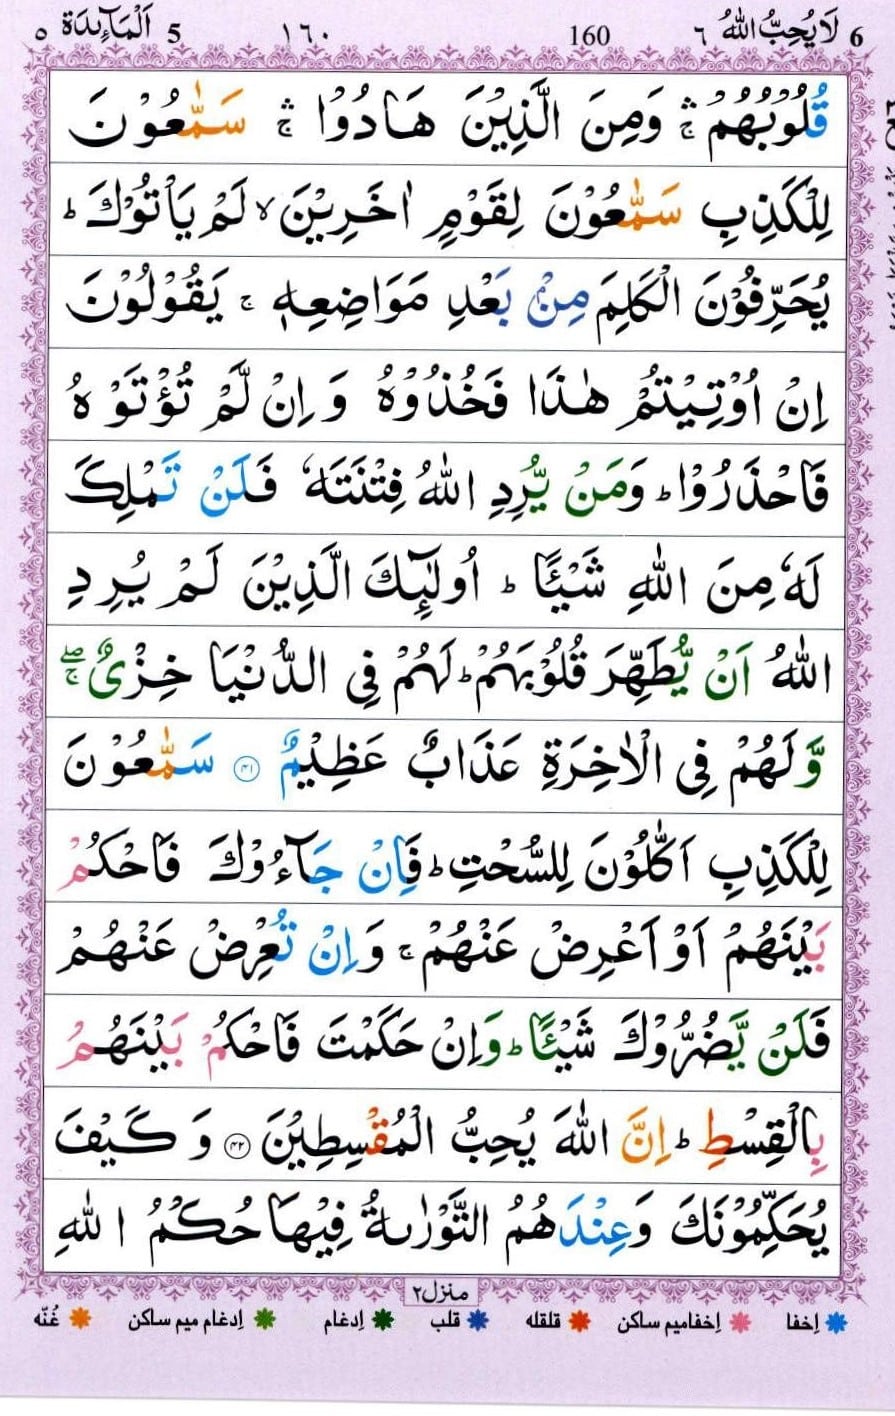 Surah Al Maidah in Arabic